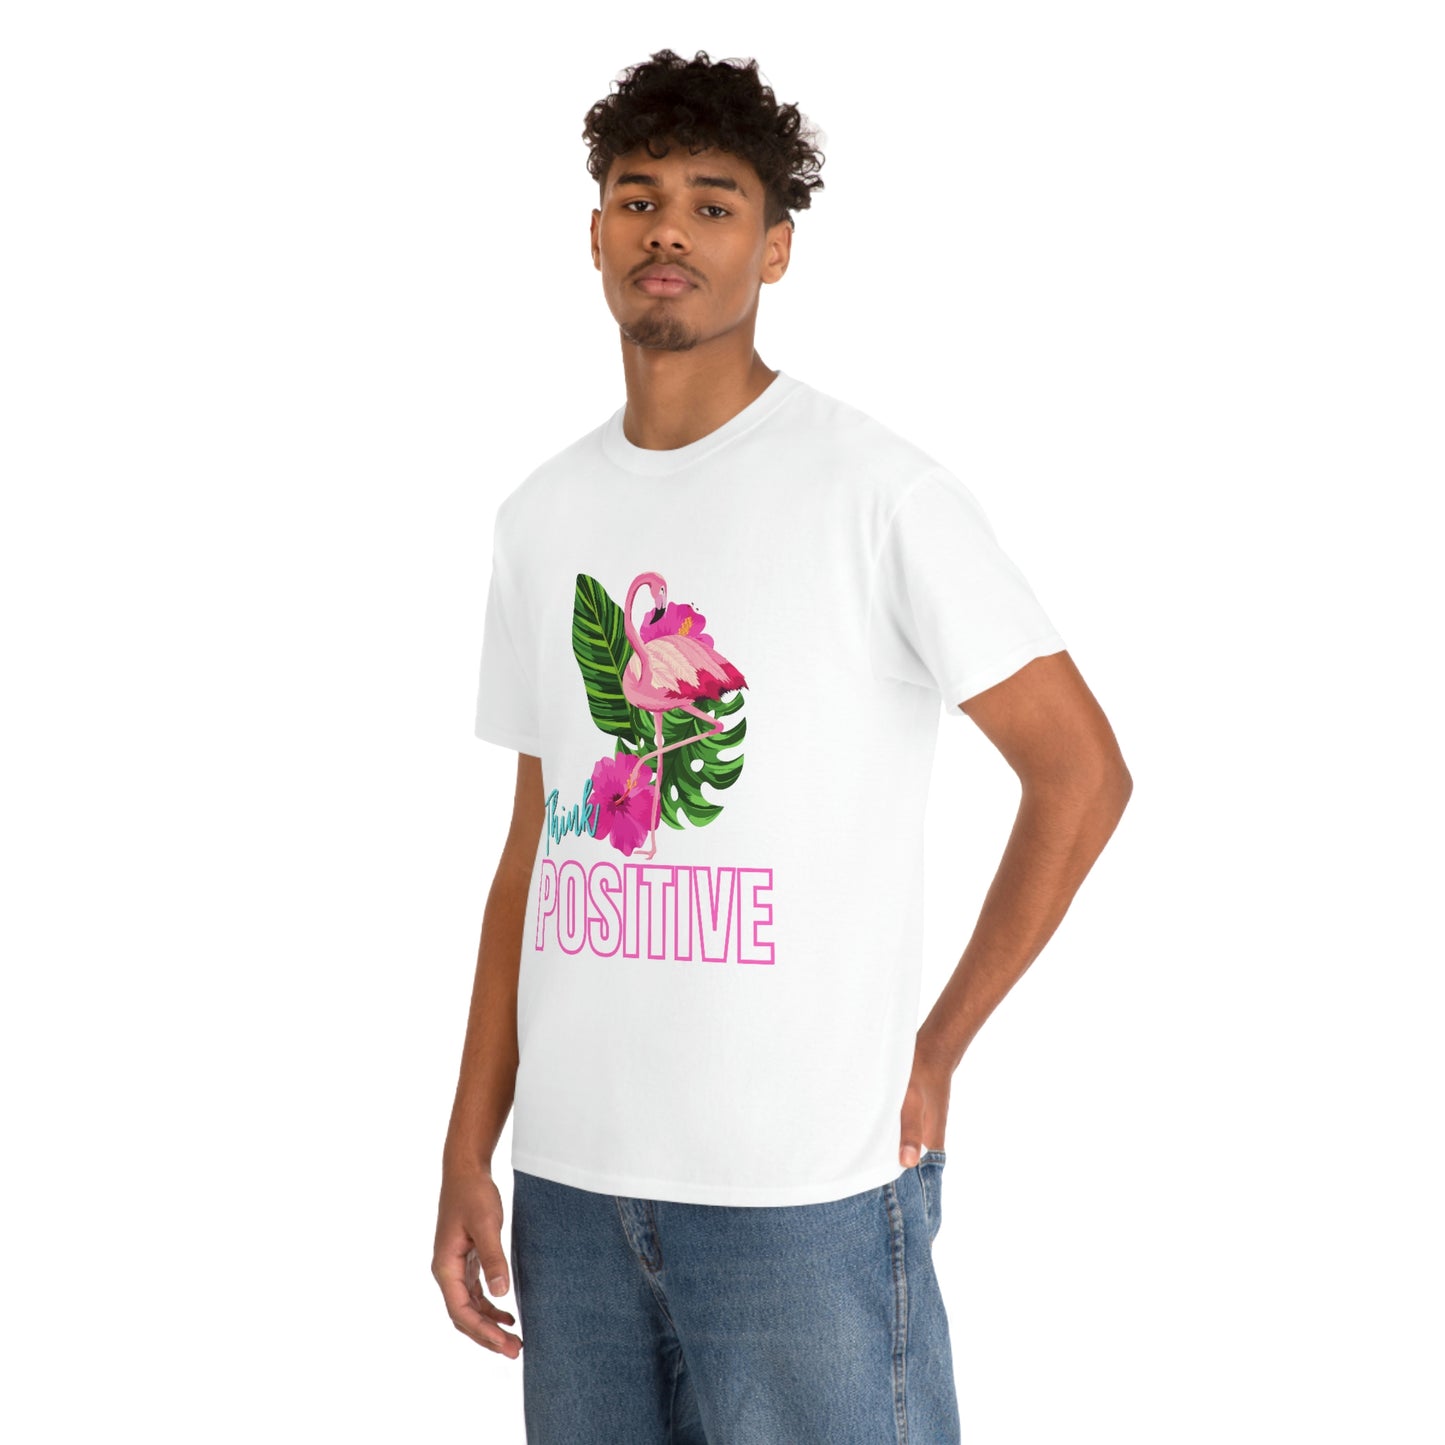 "Think Positive" Flamingo Tropical Graphic tee shirt